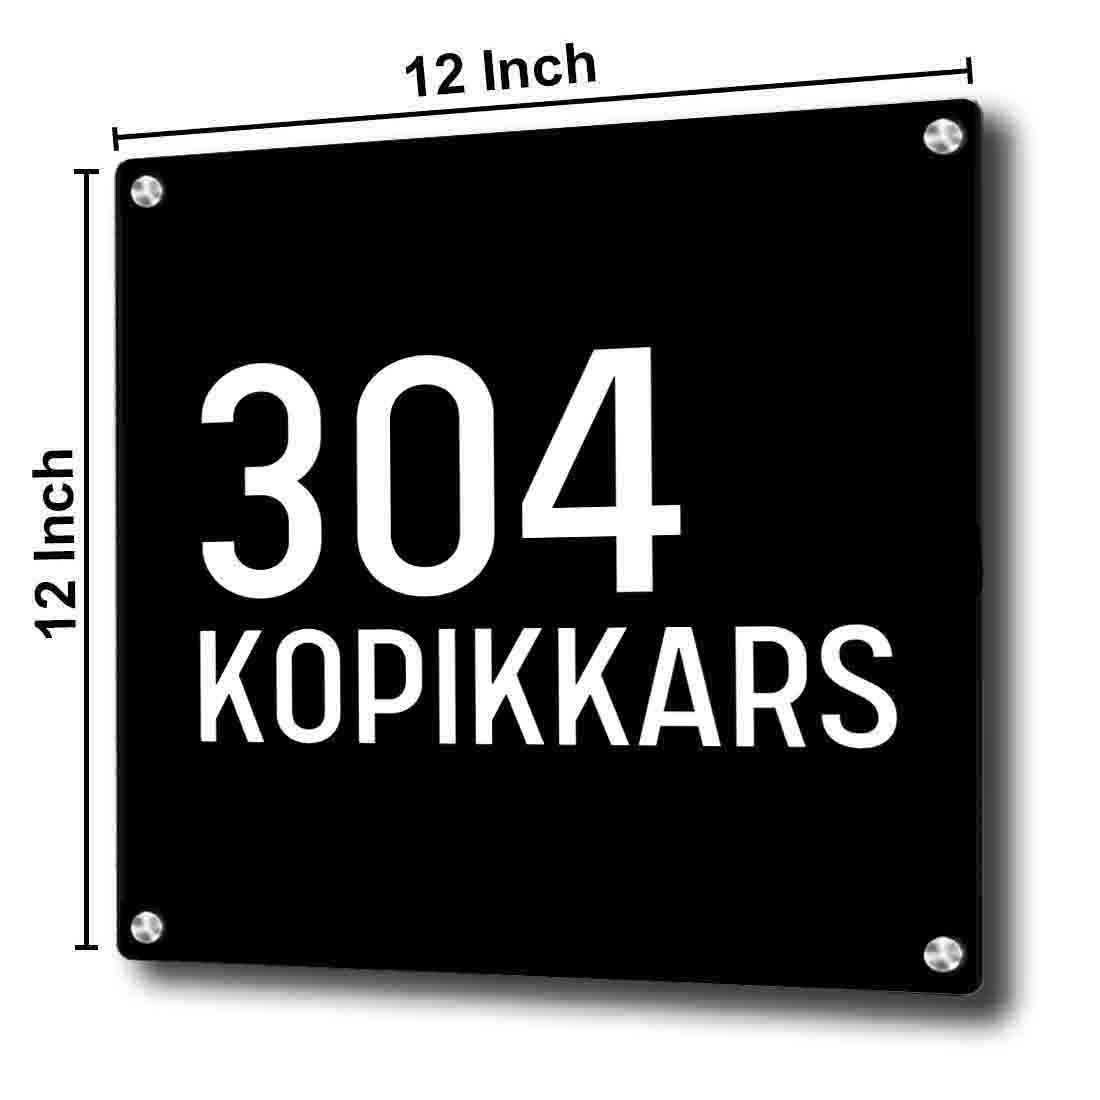 name plate in metal